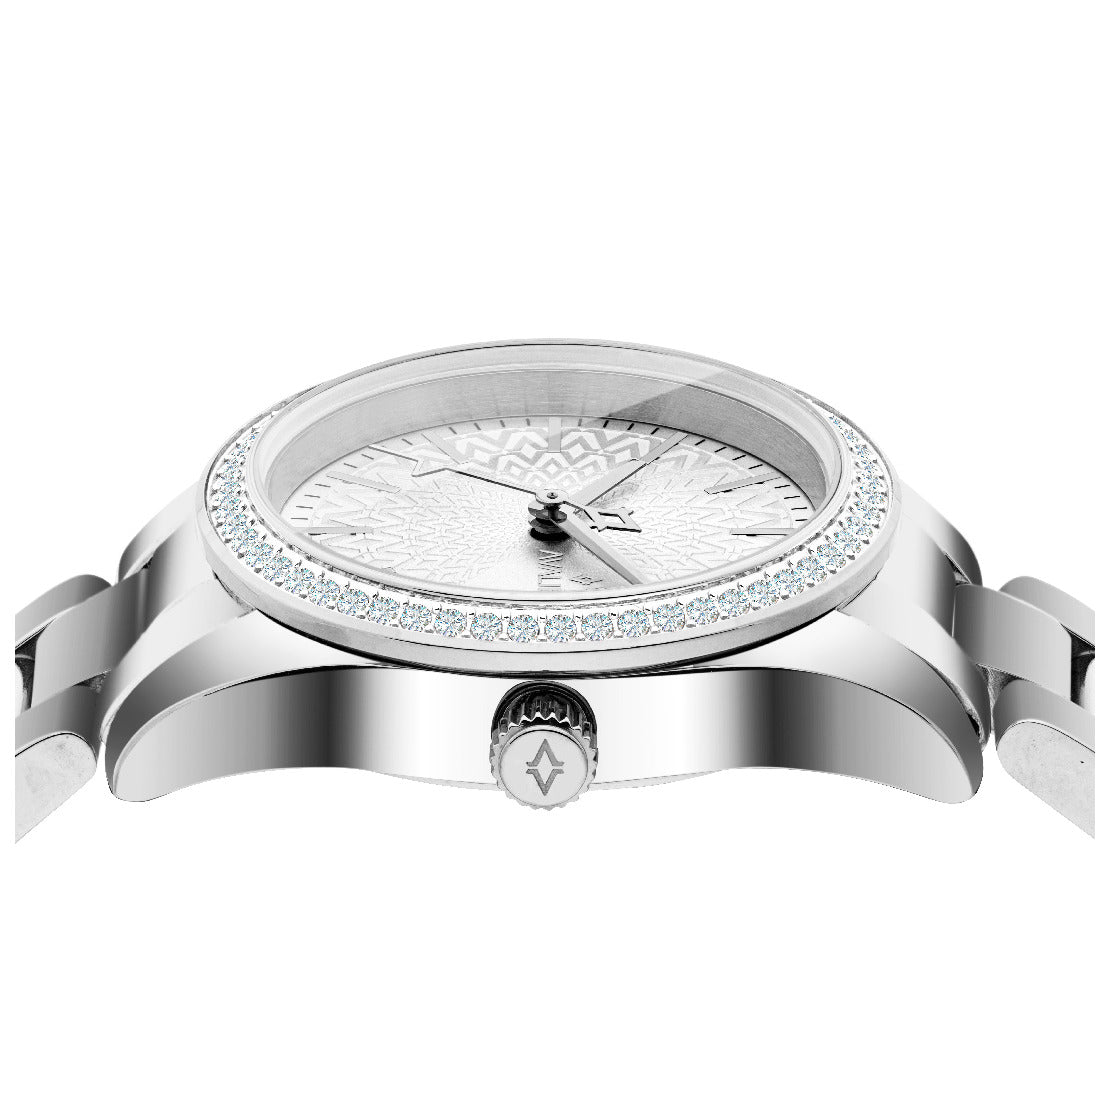 Avalieri Women's Quartz Watch With Silver White Dial - AV-2478B